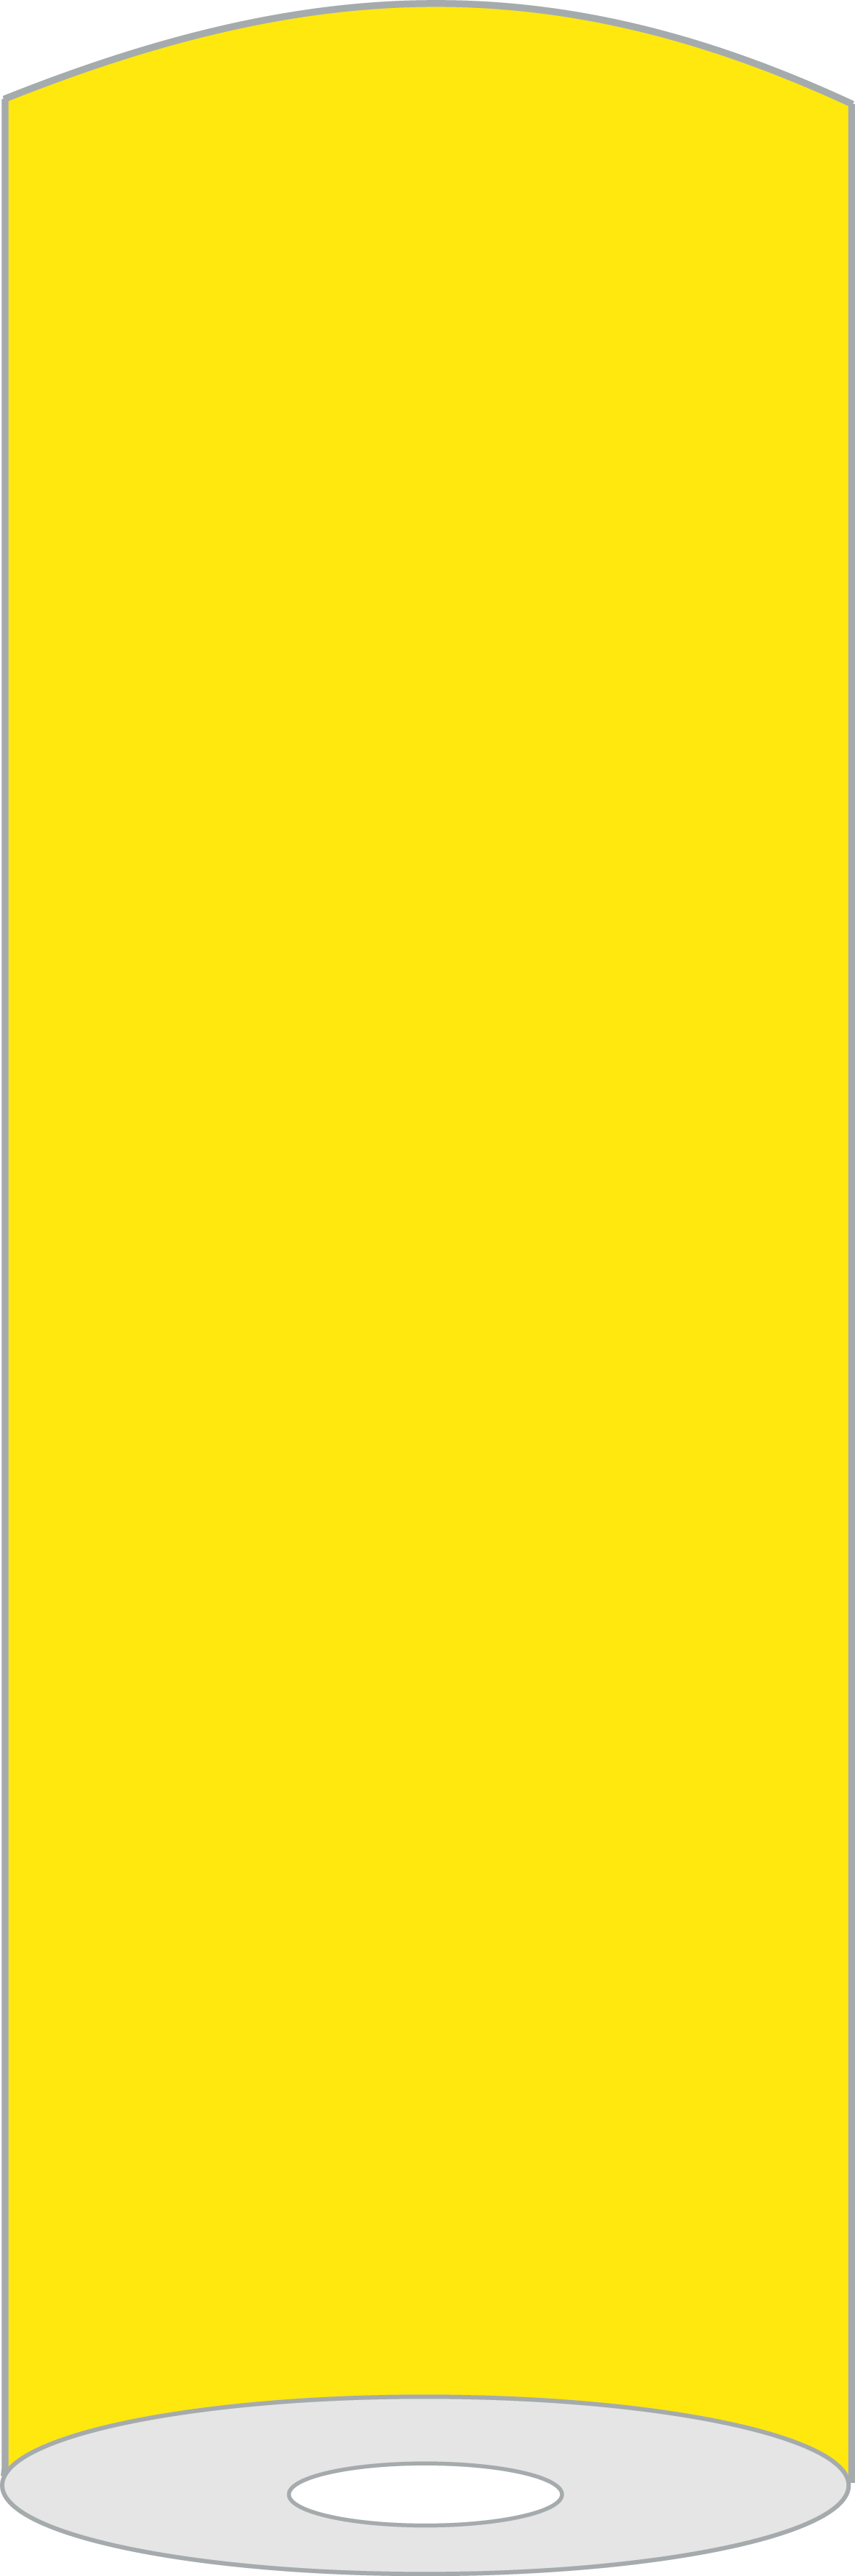 Mank Tischdeckrolle Linclass 1,20 x 25 m, Basic gelb